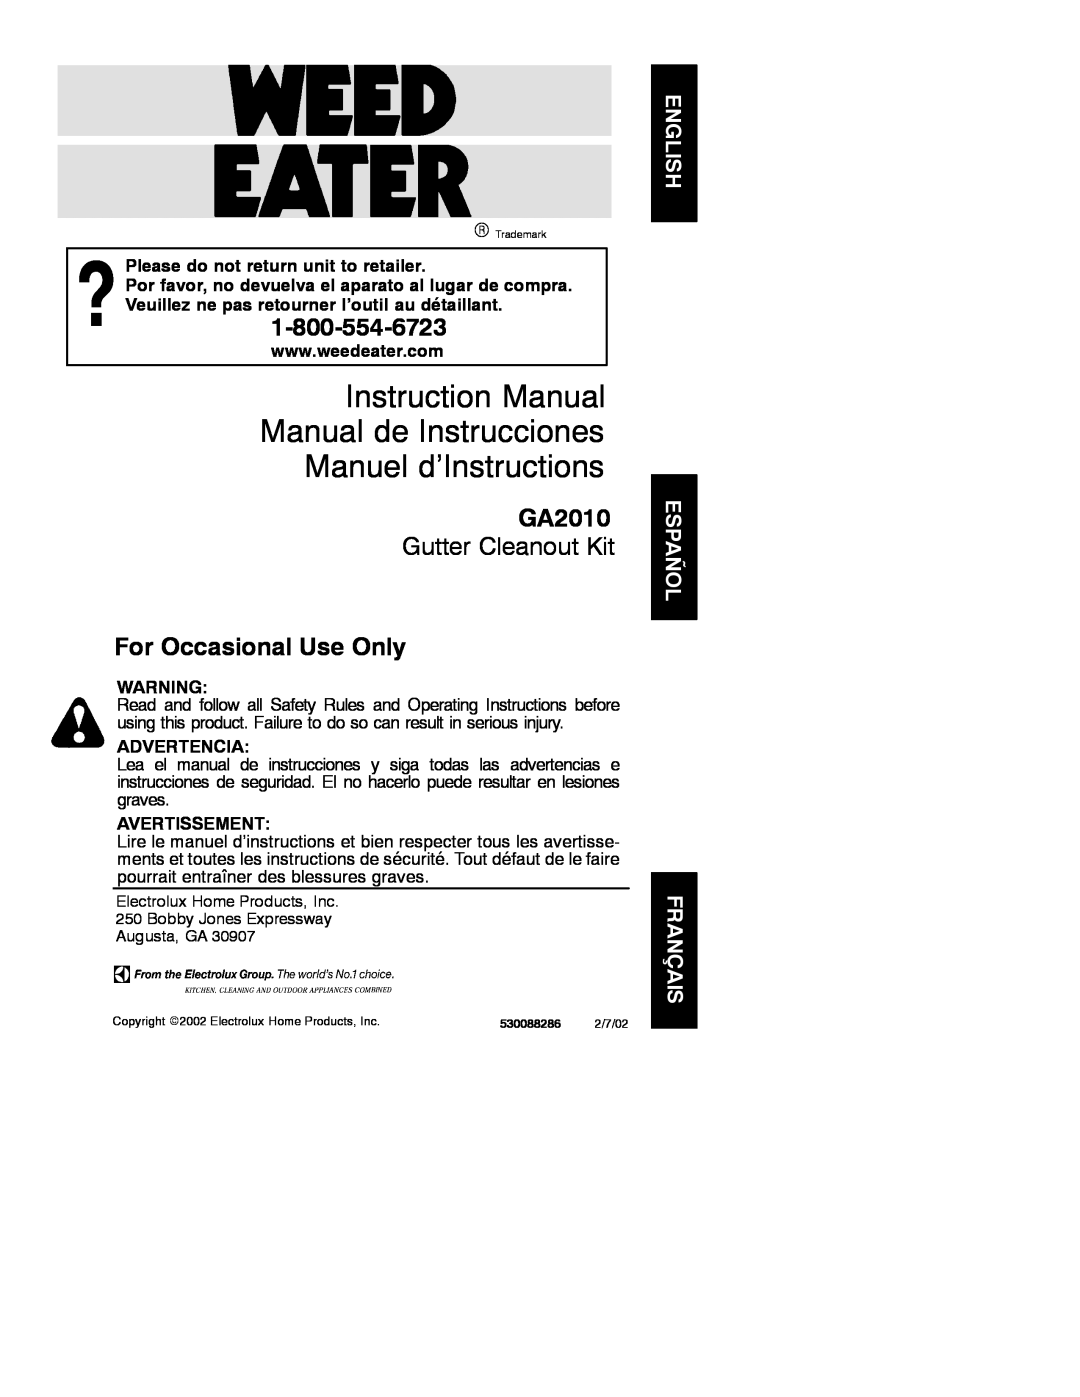 Weed Eater GA2010 instruction manual Please do not return unit to retailer, Advertencia, Avertissement 